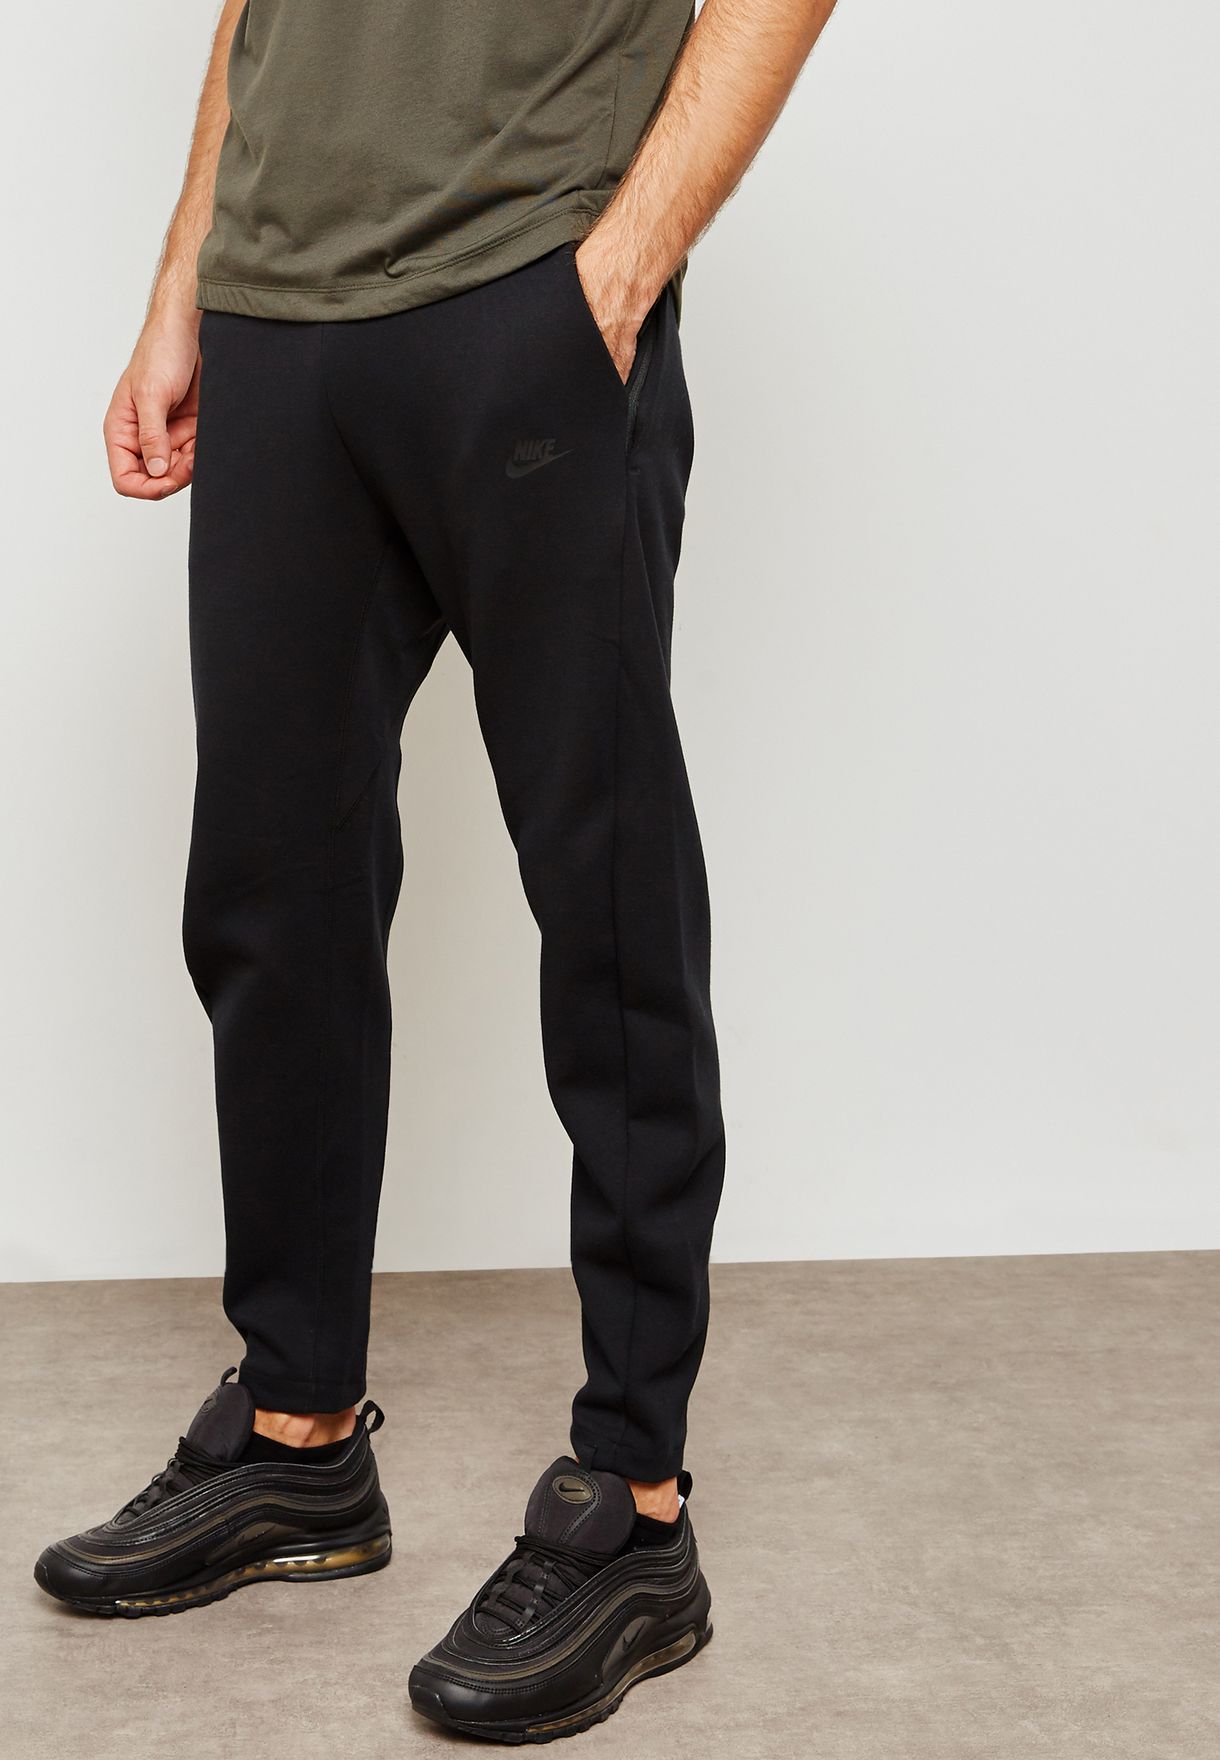 Buy Nike black Tech Fleece Sweatpants 